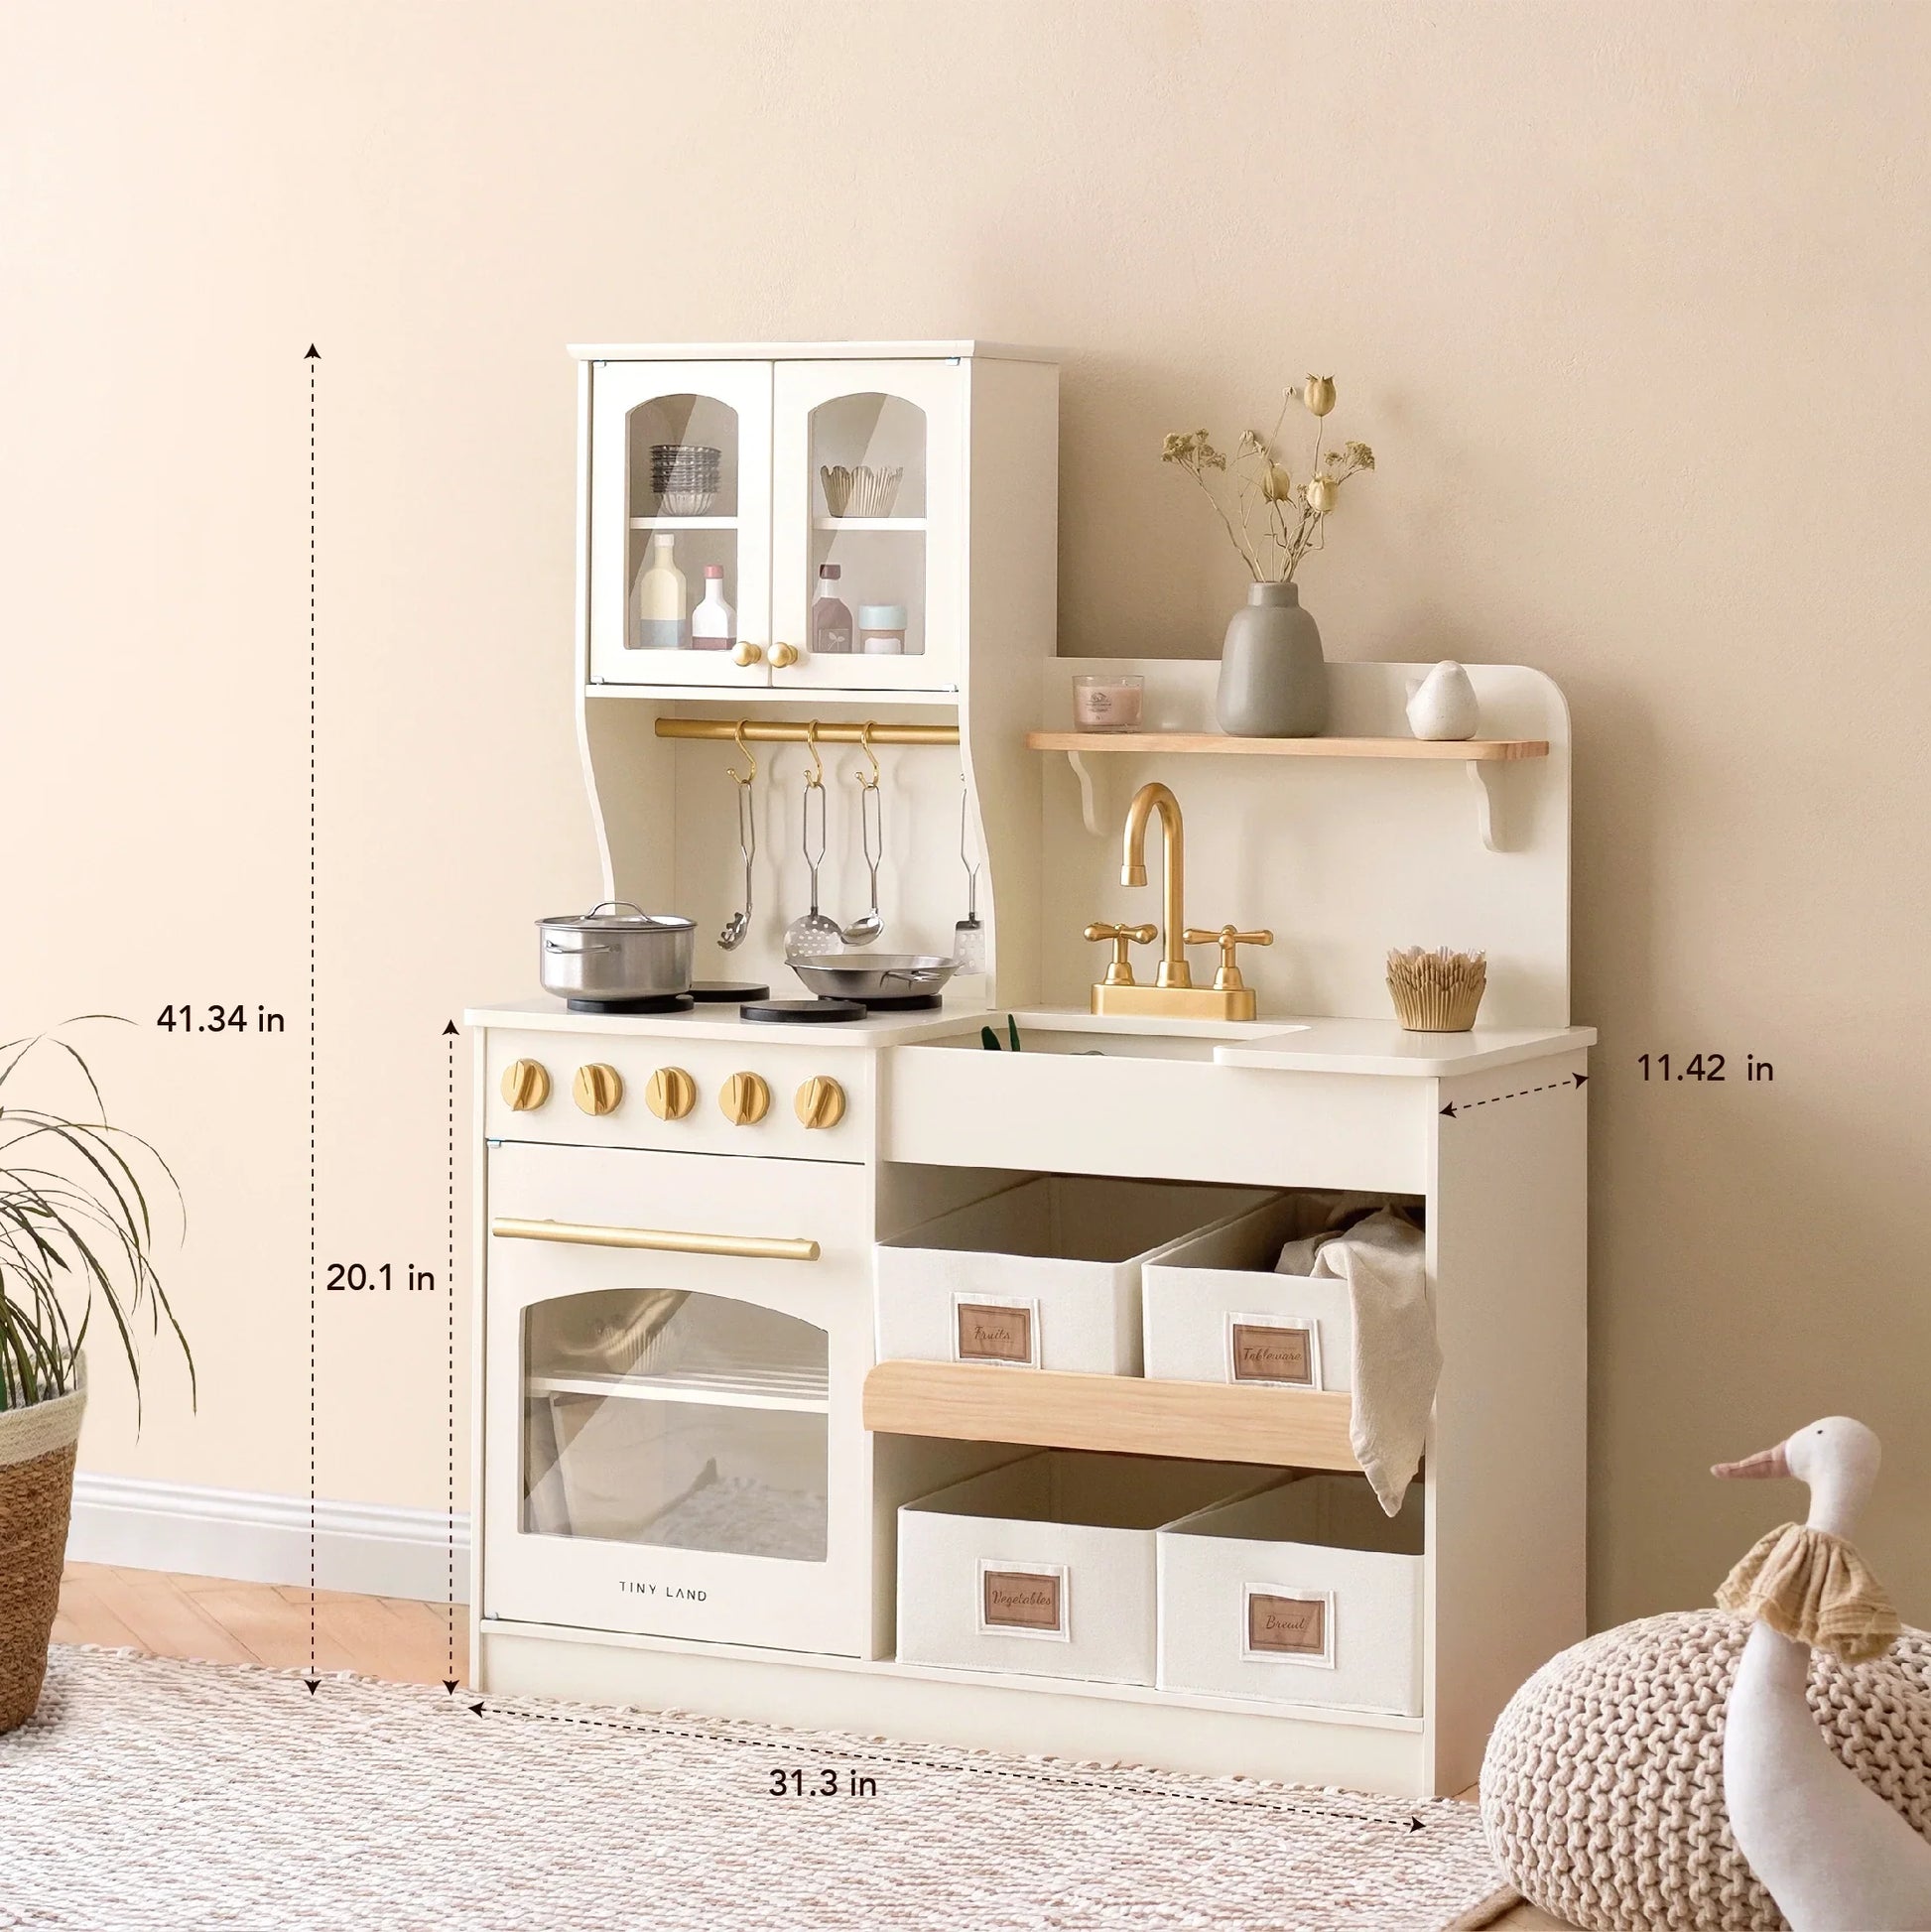 Tiny Land® Trendy Play Kitchen - Montessori Organizer's Paradise